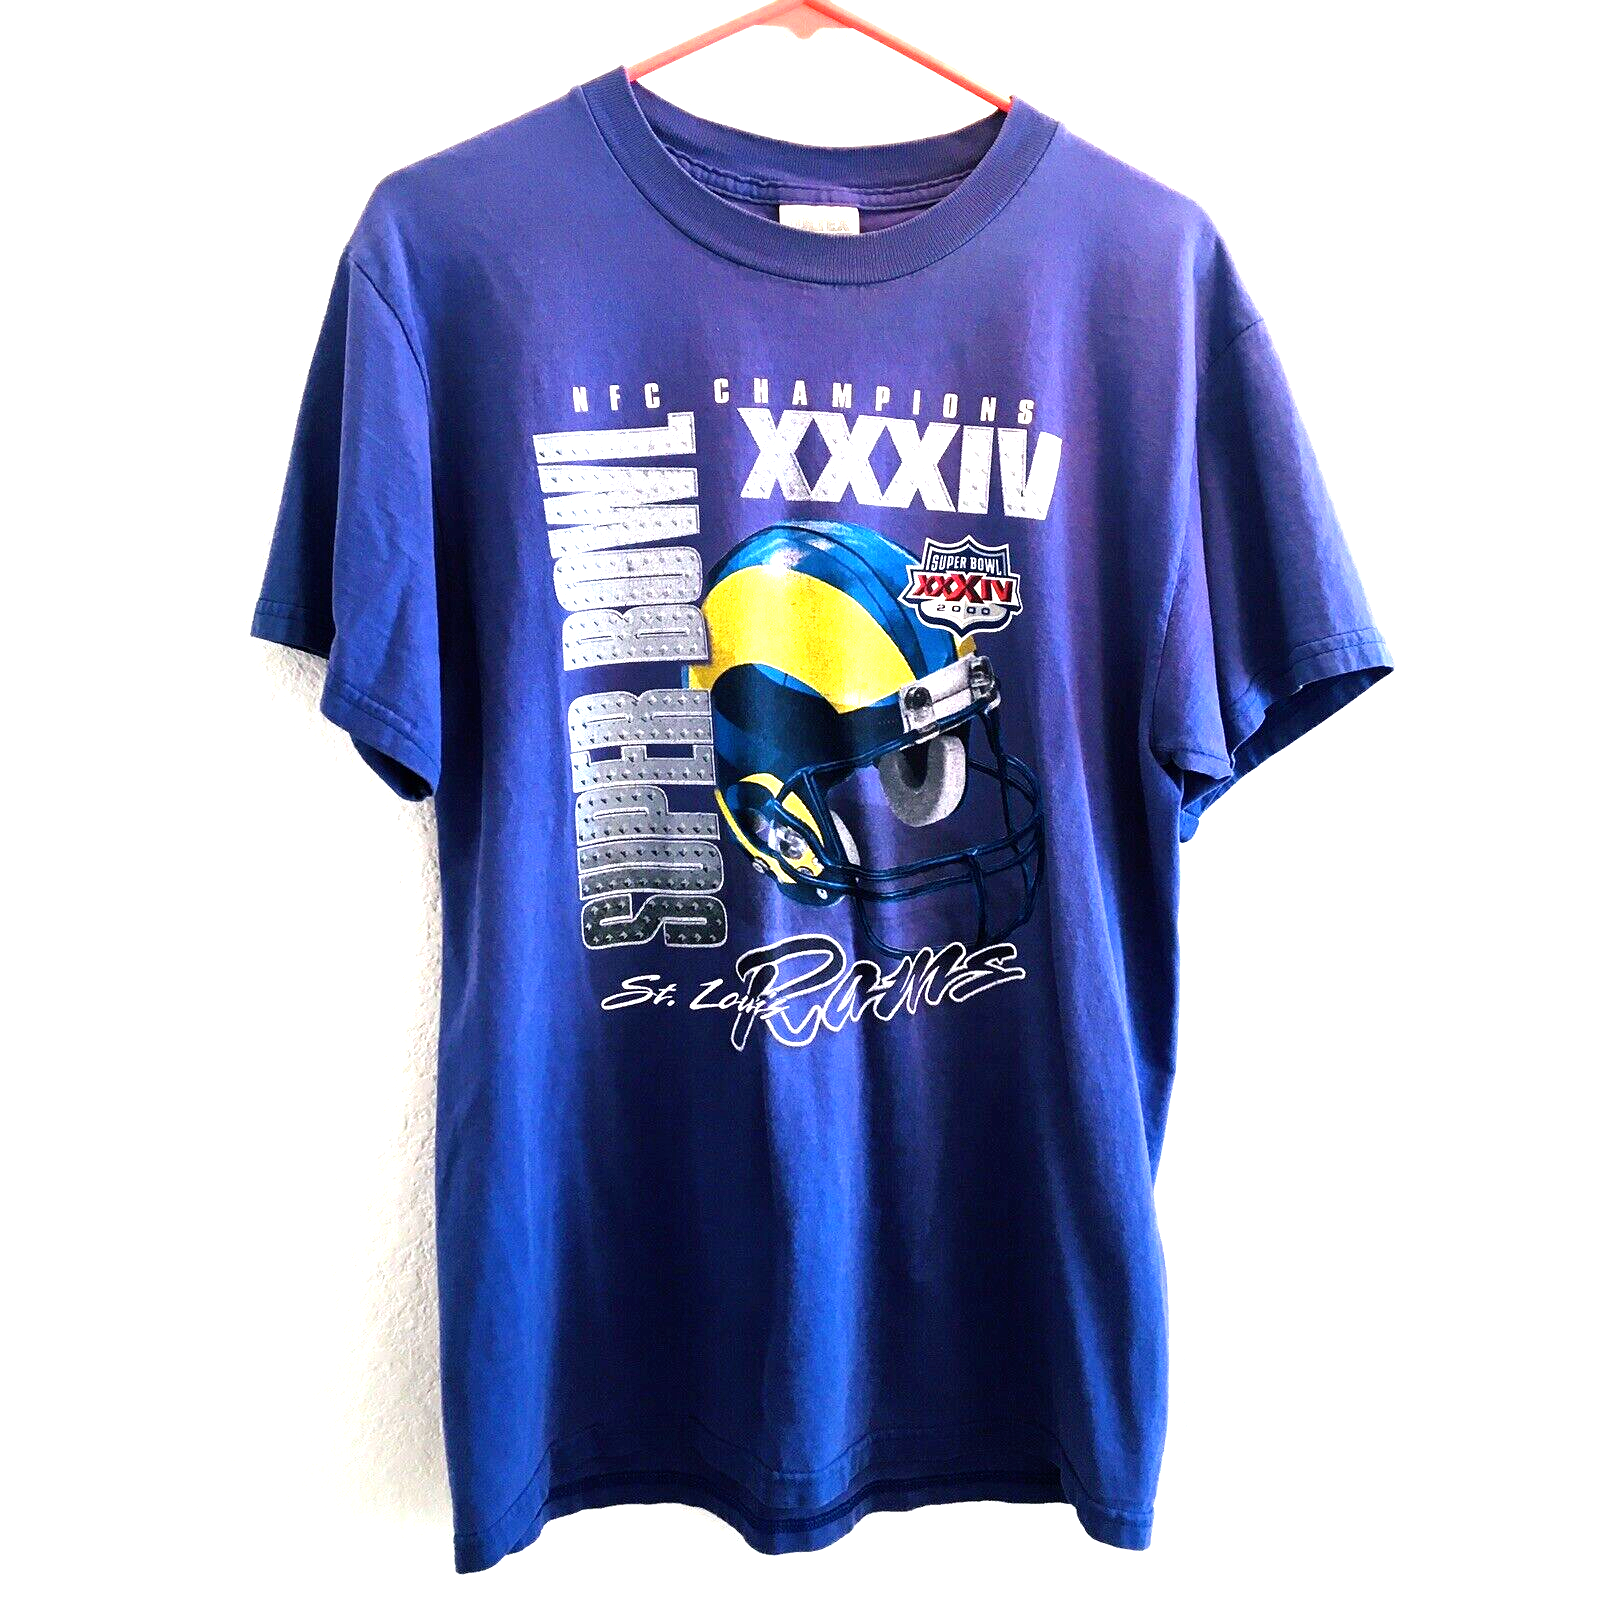 VTG 2000 St Louis Rams Super Bowl XXXIV Champions NFL Shirt XL Tultex Tag Y2K - $66.49